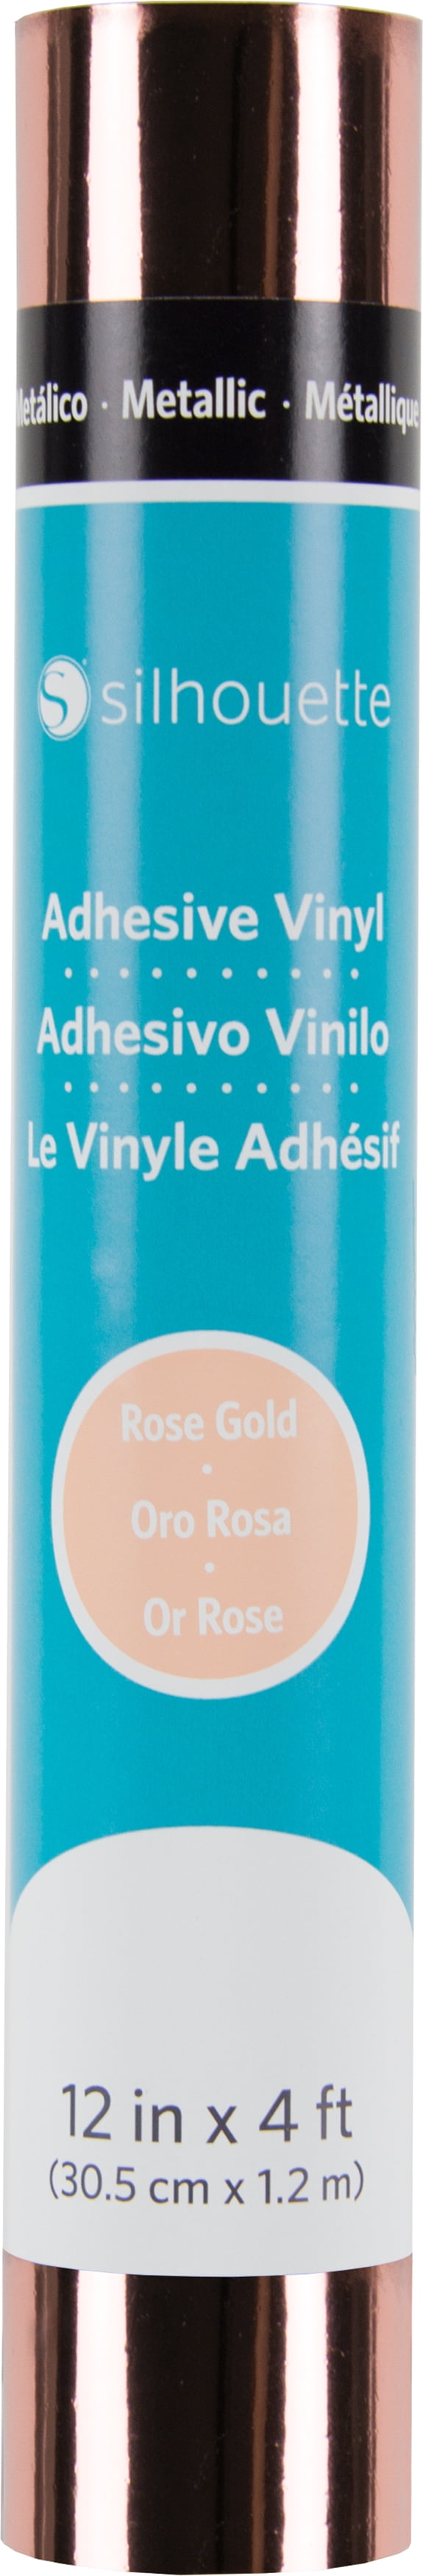 herramientas Silhouette Cameo Cricut para manualidades brillante metálico adhesivo permanente Rose Gold rollo 30,5 x 250cm Lámina de vinilo holográfica cromada de Plata 